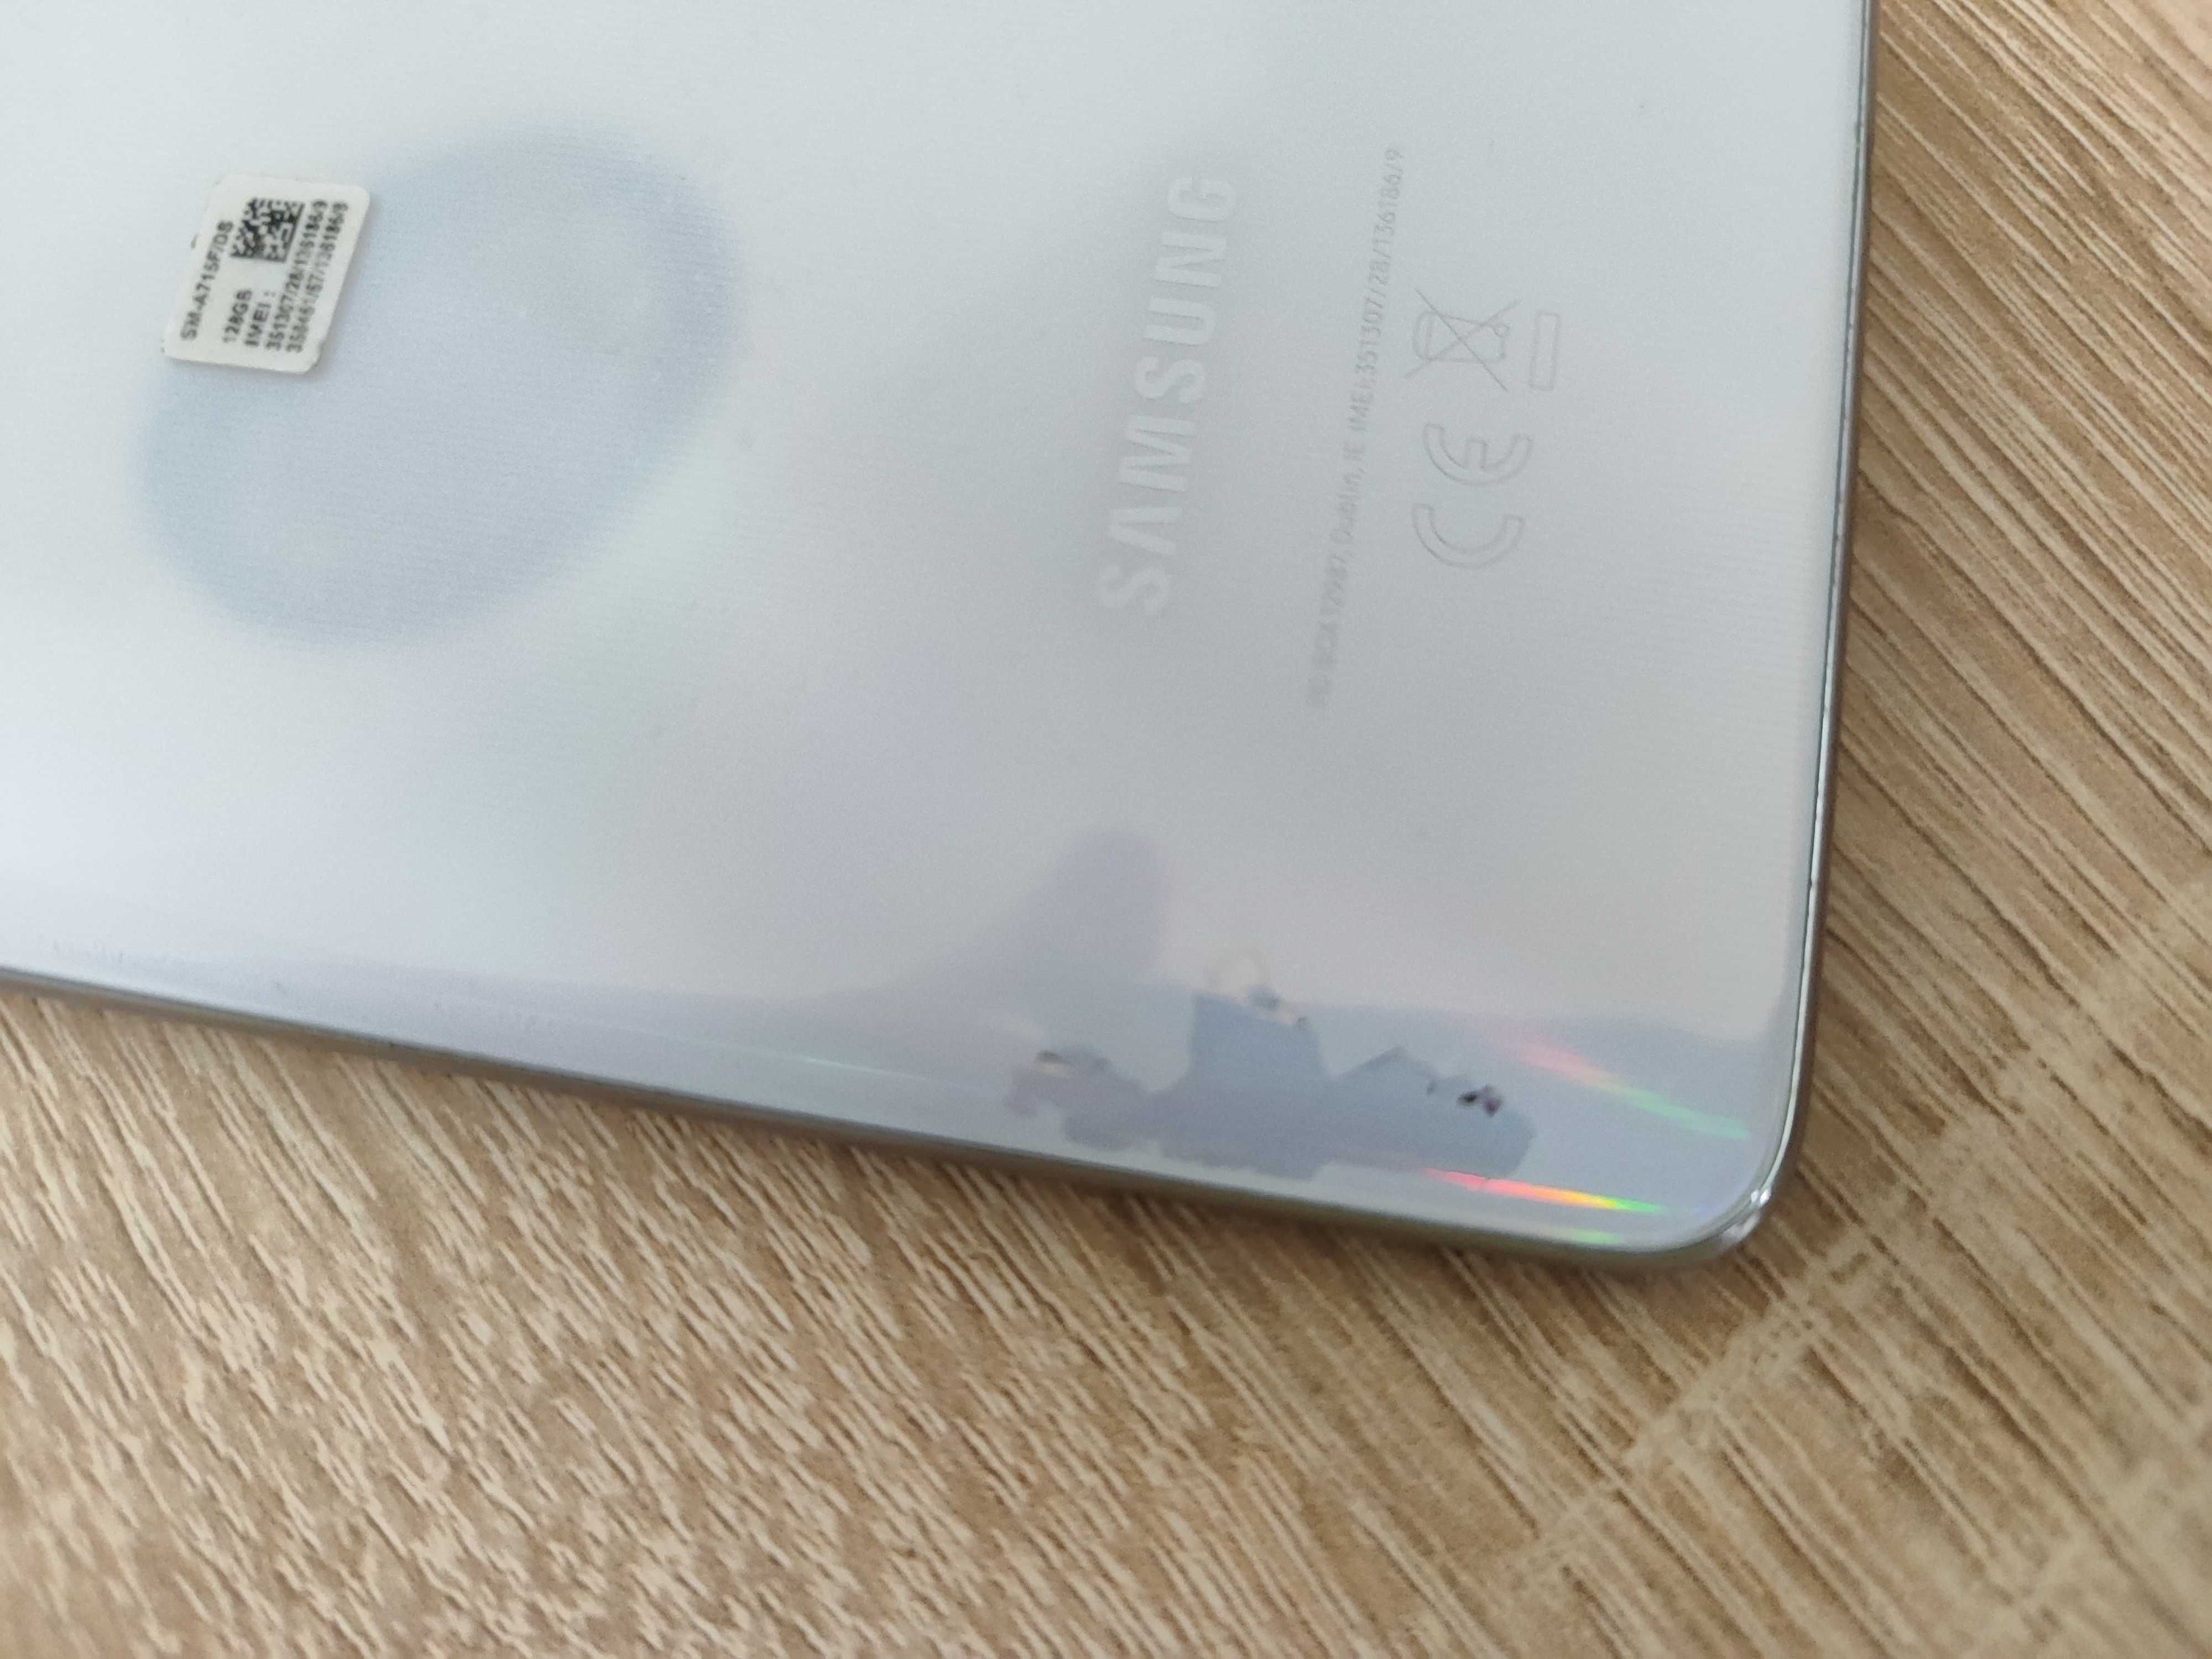 Smartfon Samsung A71